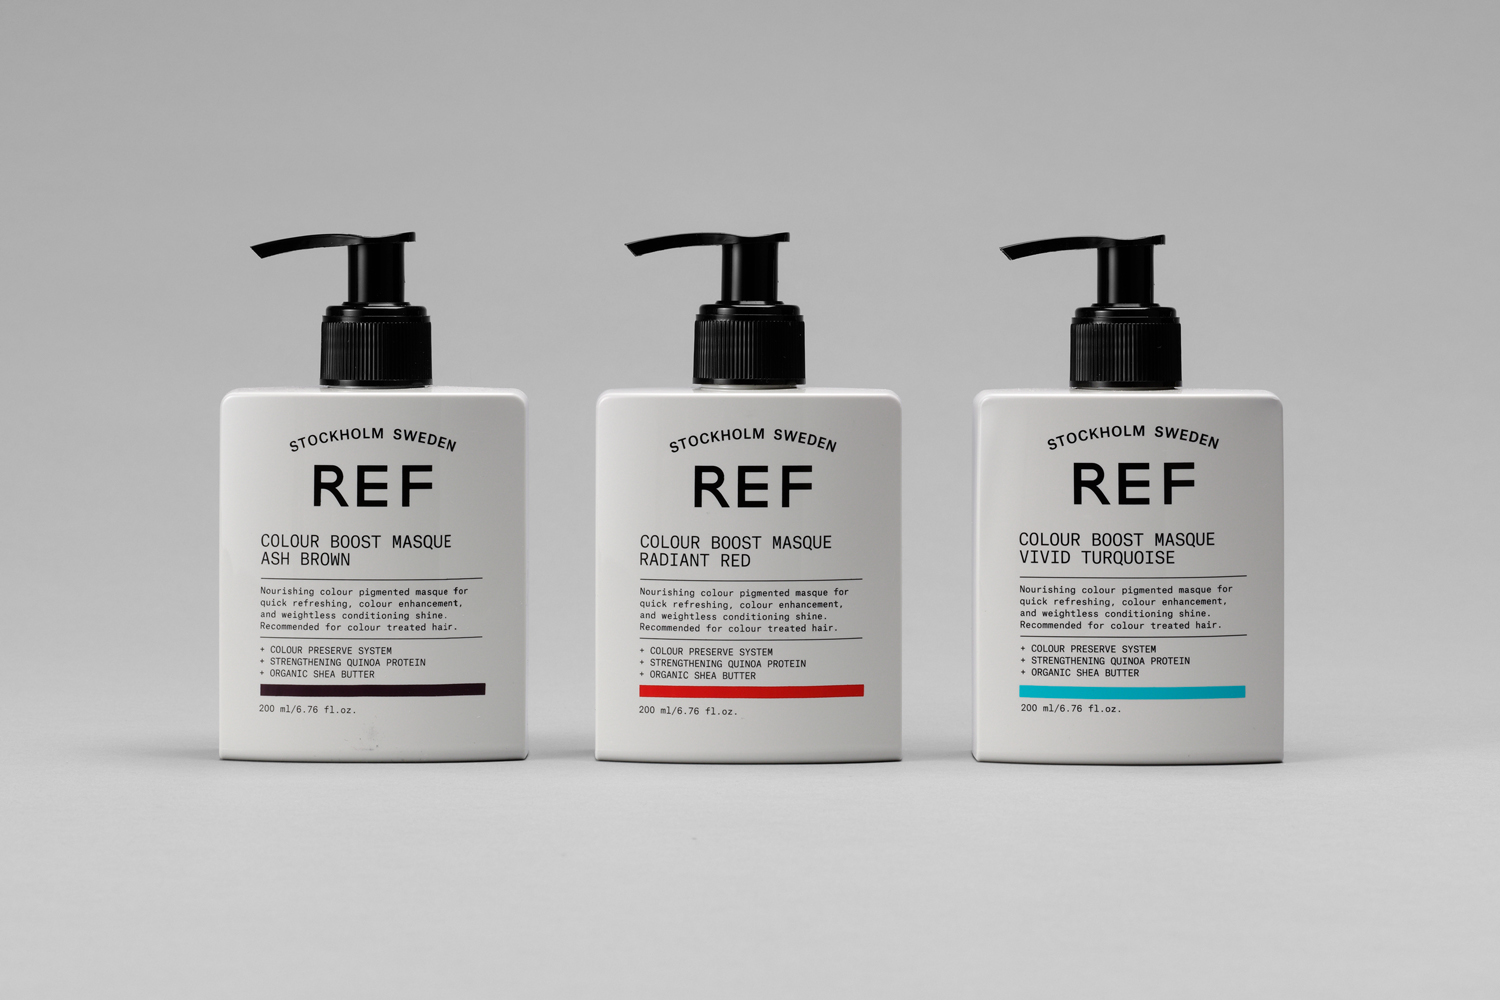 Visual identity and package design by Scandinavian studio Kurppa Hosk for Swedish hair care brand REF